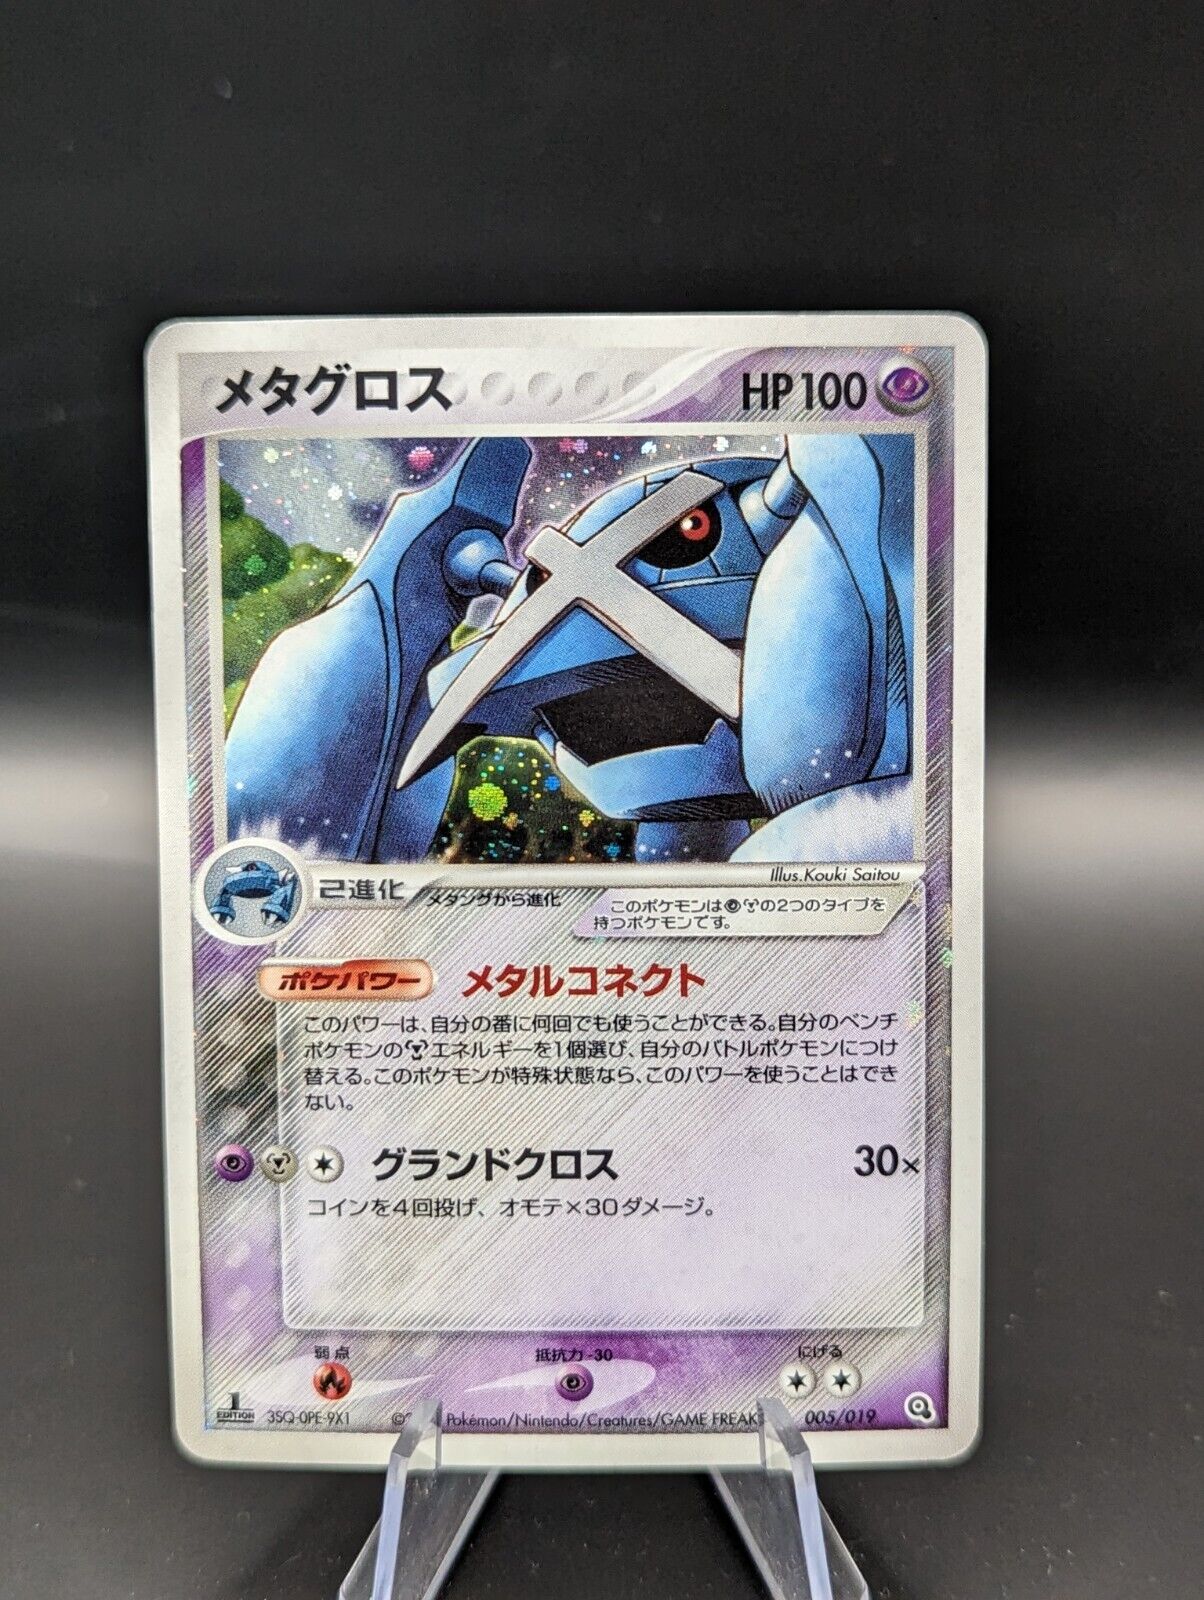 1st Edition Metagross Holo - 005/019 EX Deck EX/LP - Japanese Pokemon Card #492A